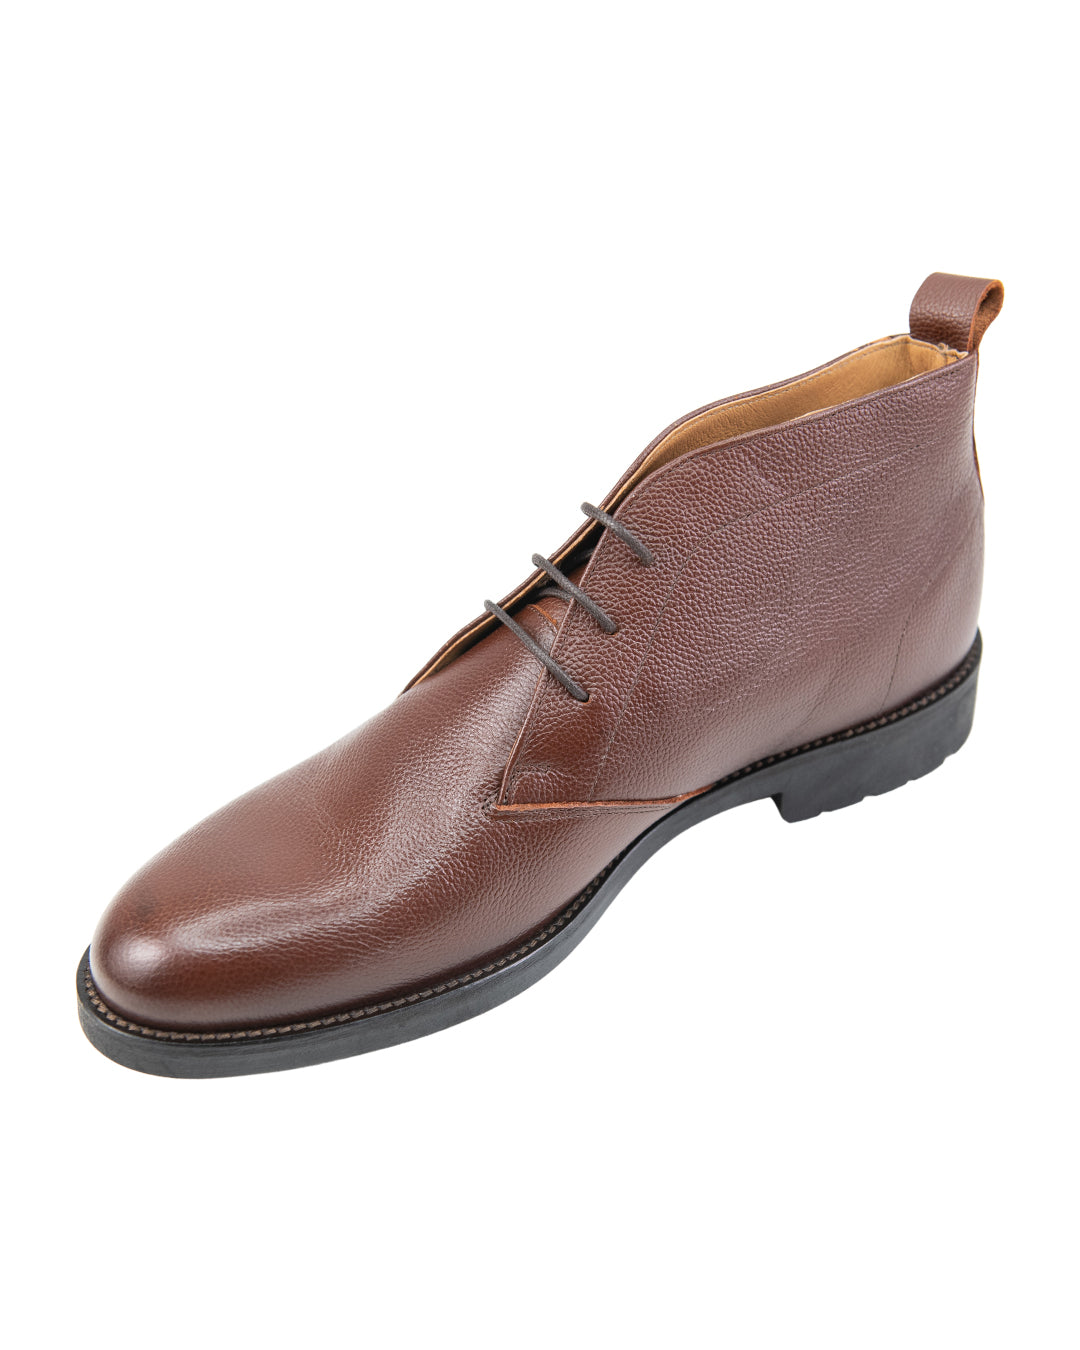 Brown Scotch Grain Leather Chukka Boots